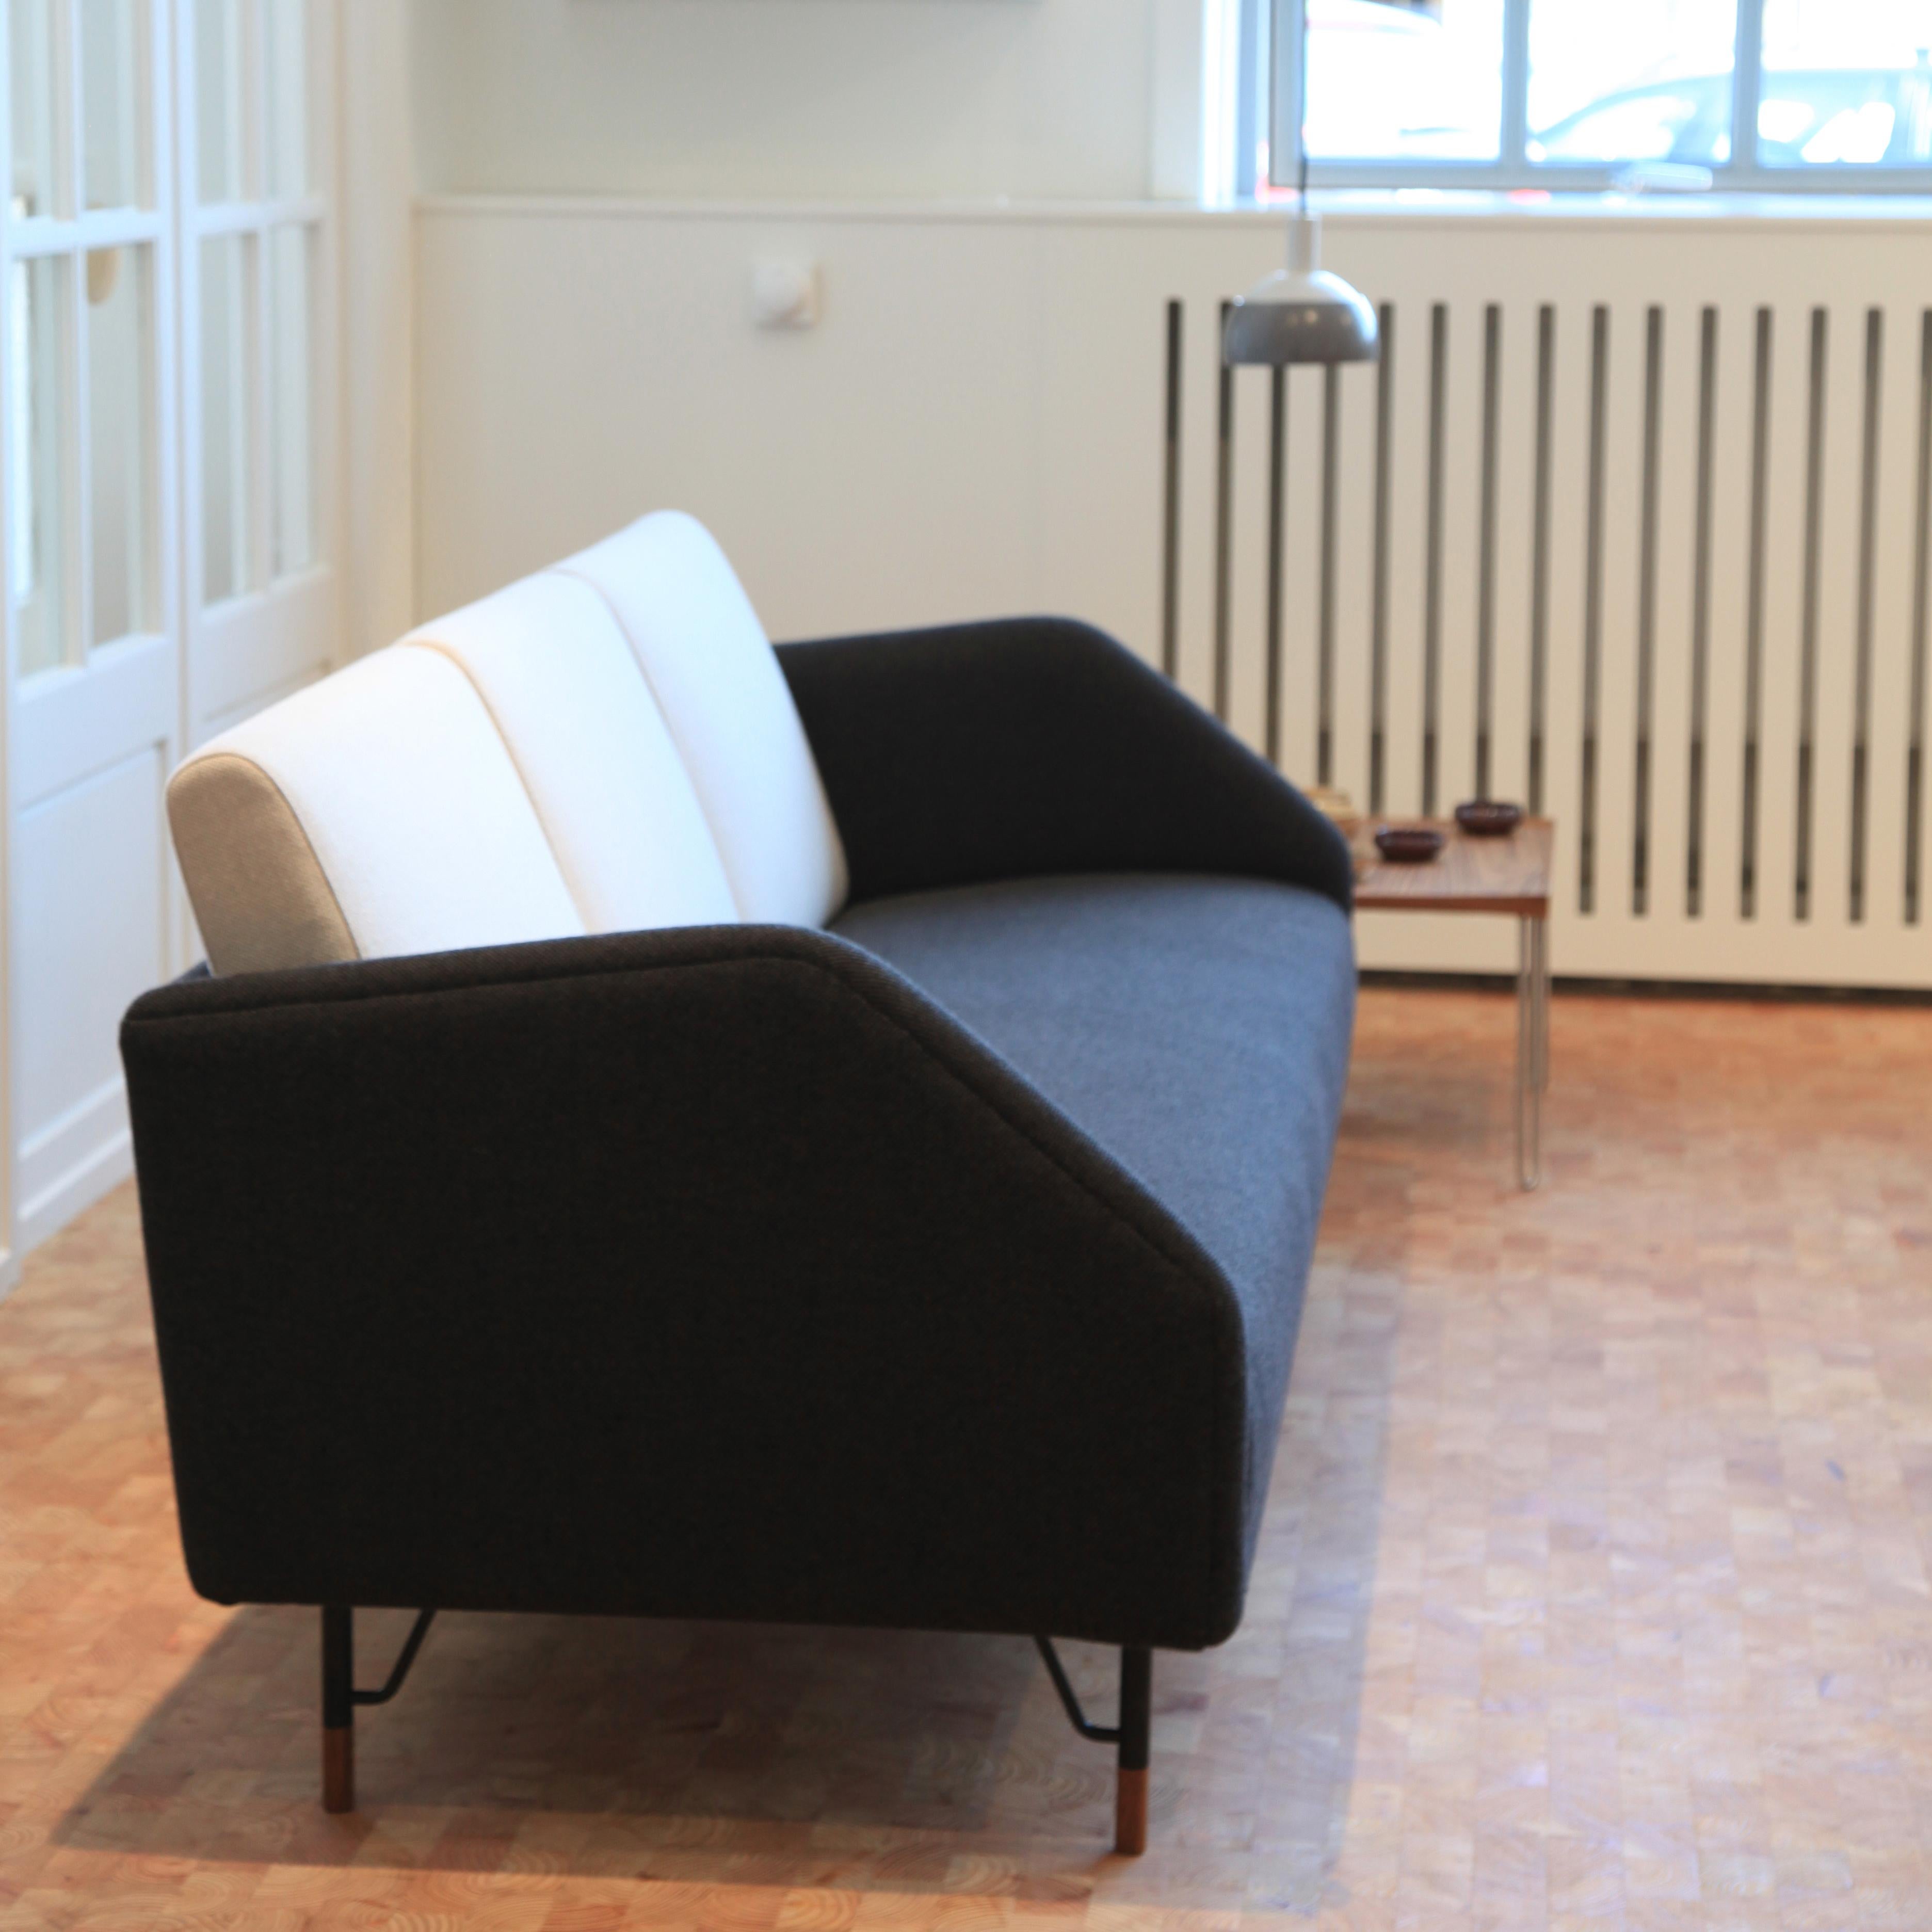 Danish Finn Juhl 2-Seat 77 Sofa Couch, Wood and Fabric